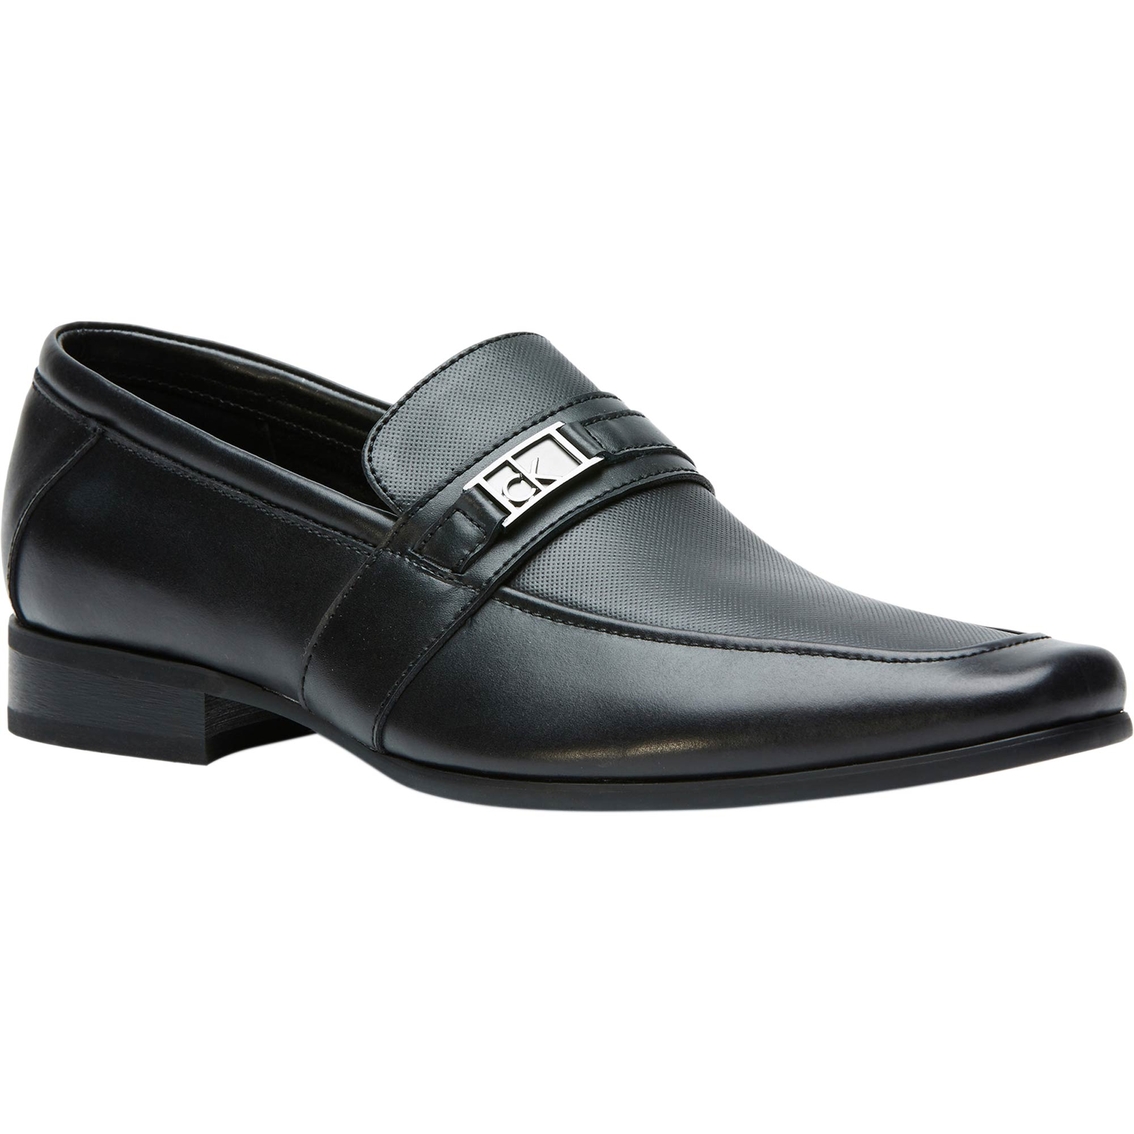 Buy > calvin klein black dress shoes > in stock